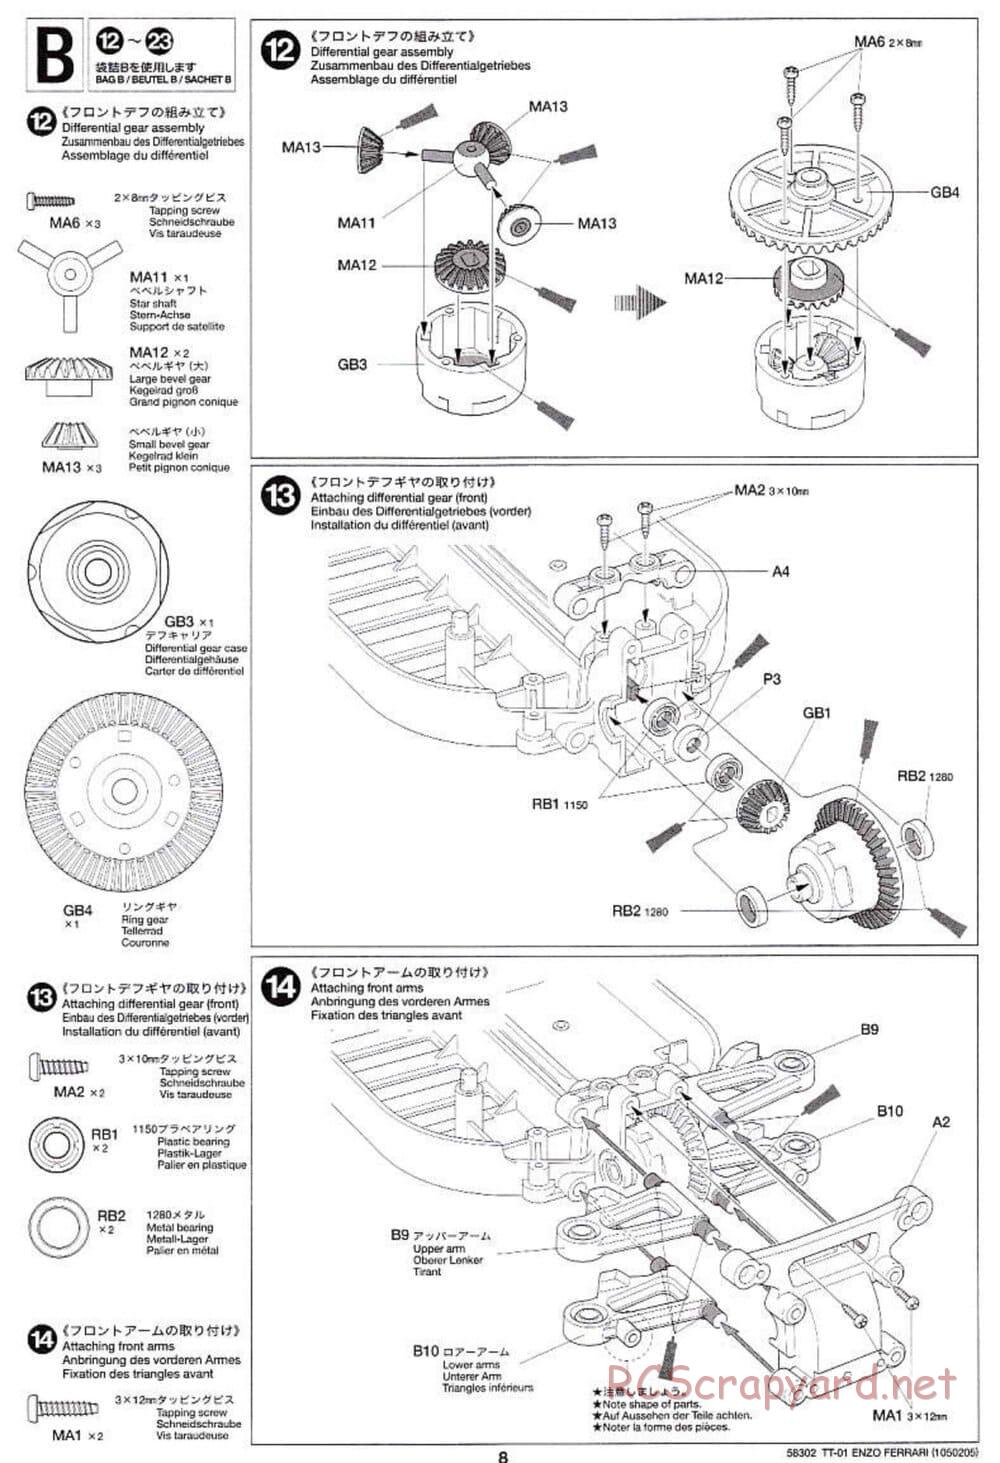 Tamiya - Enzo Ferrari - TT-01 Chassis - Manual - Page 8